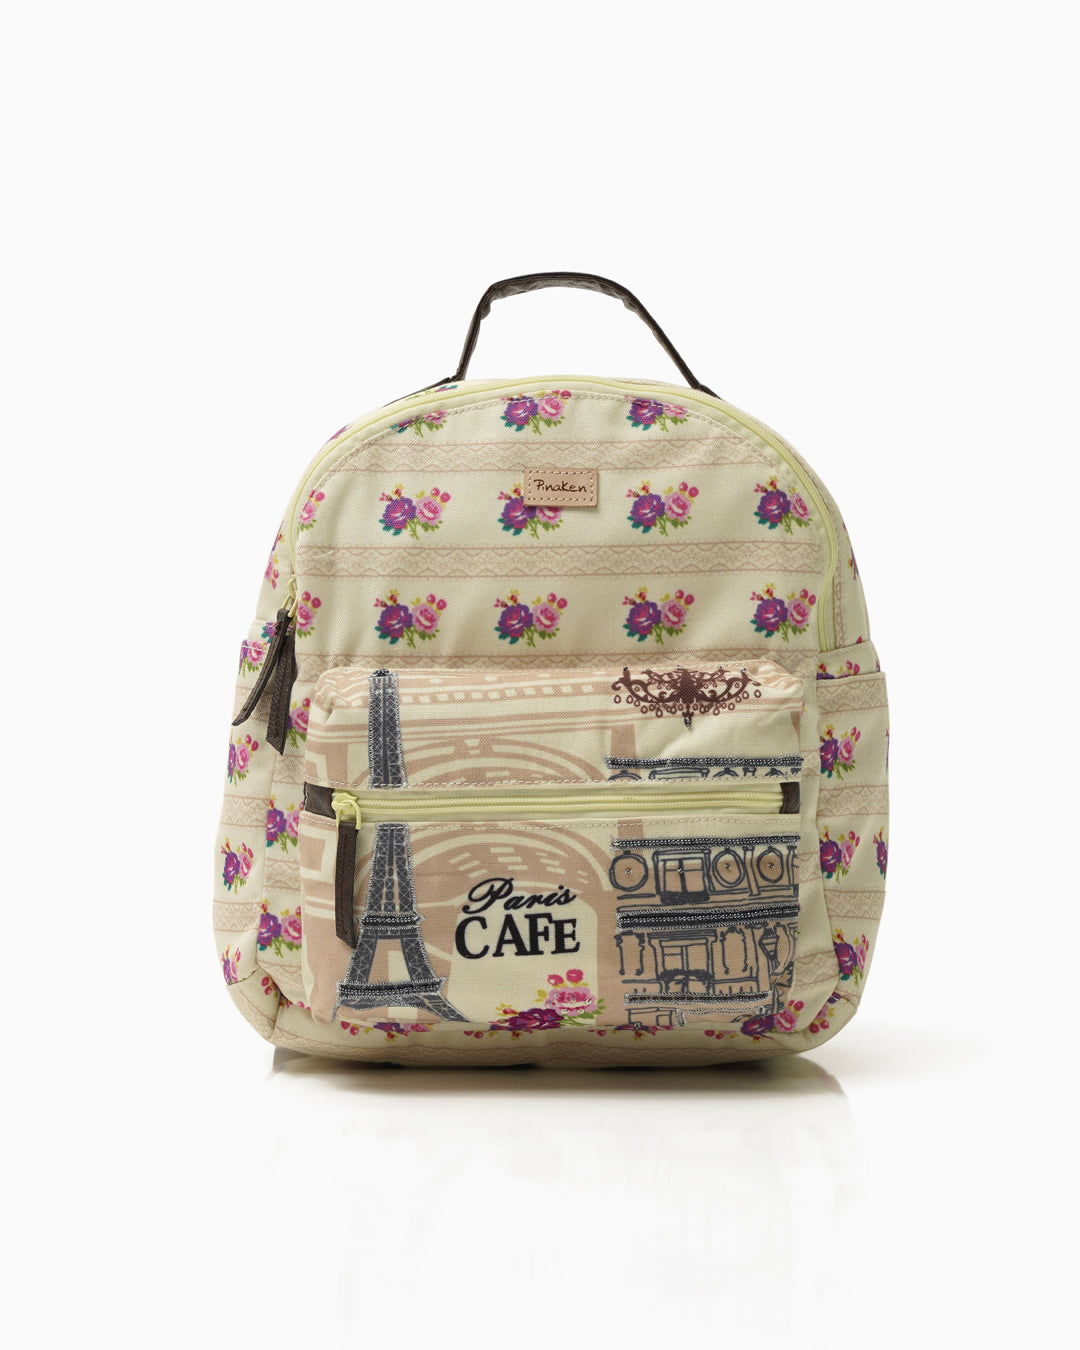 Paris Café Backpack with Side Pockets